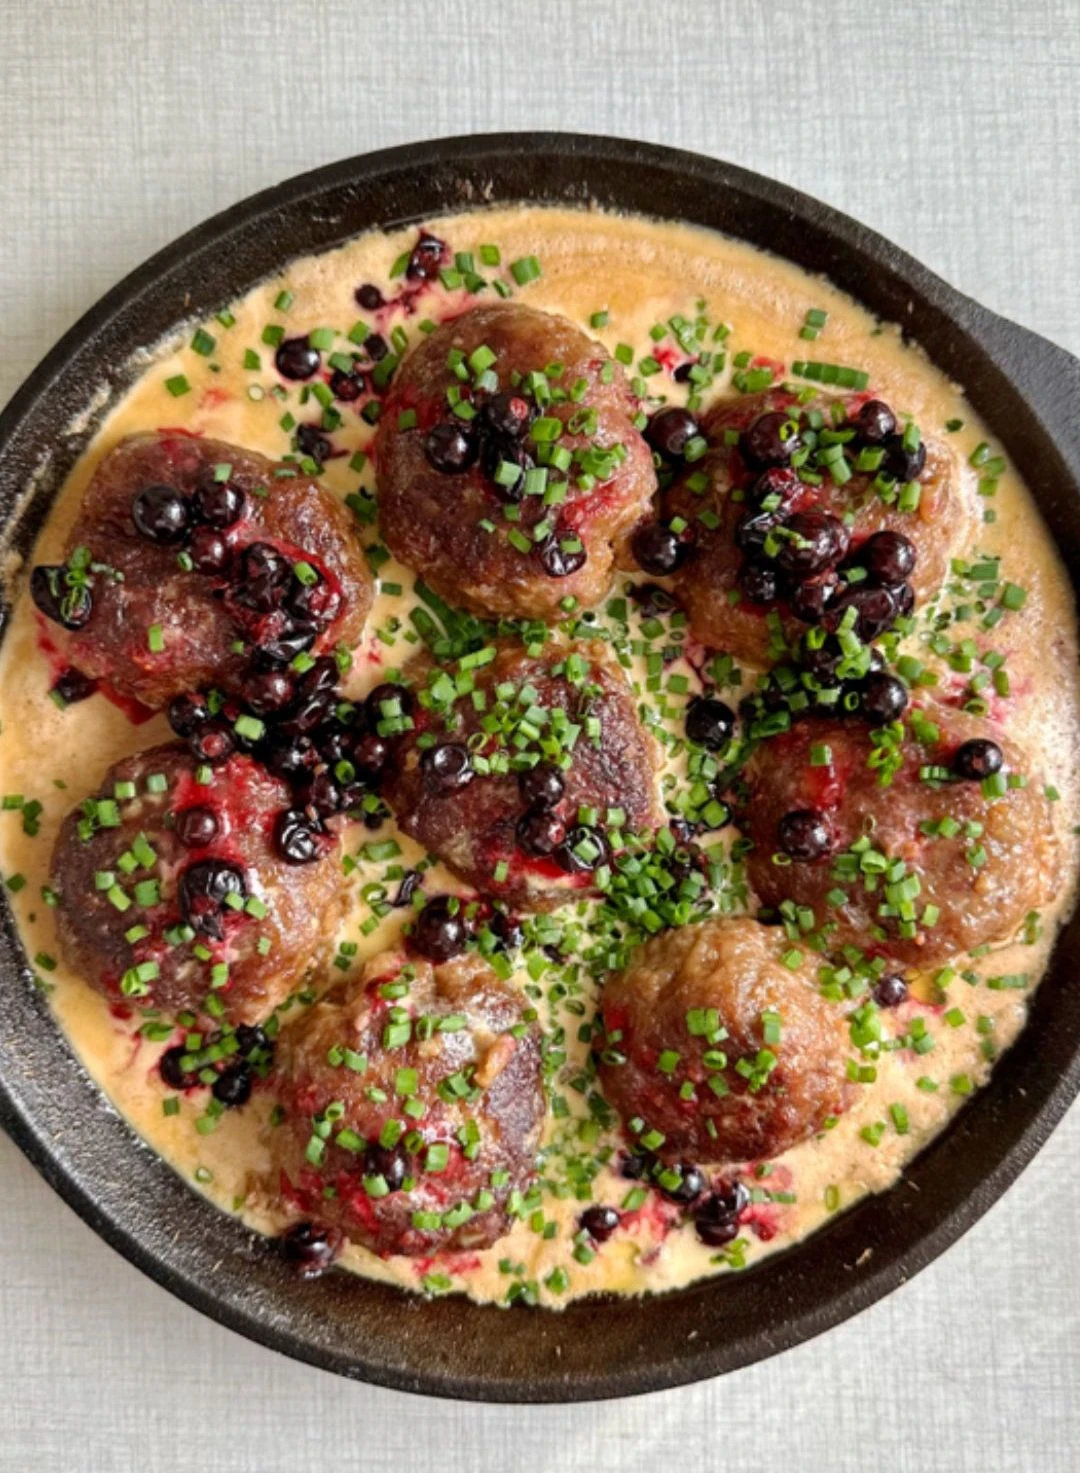 Home-made juicy meatballs